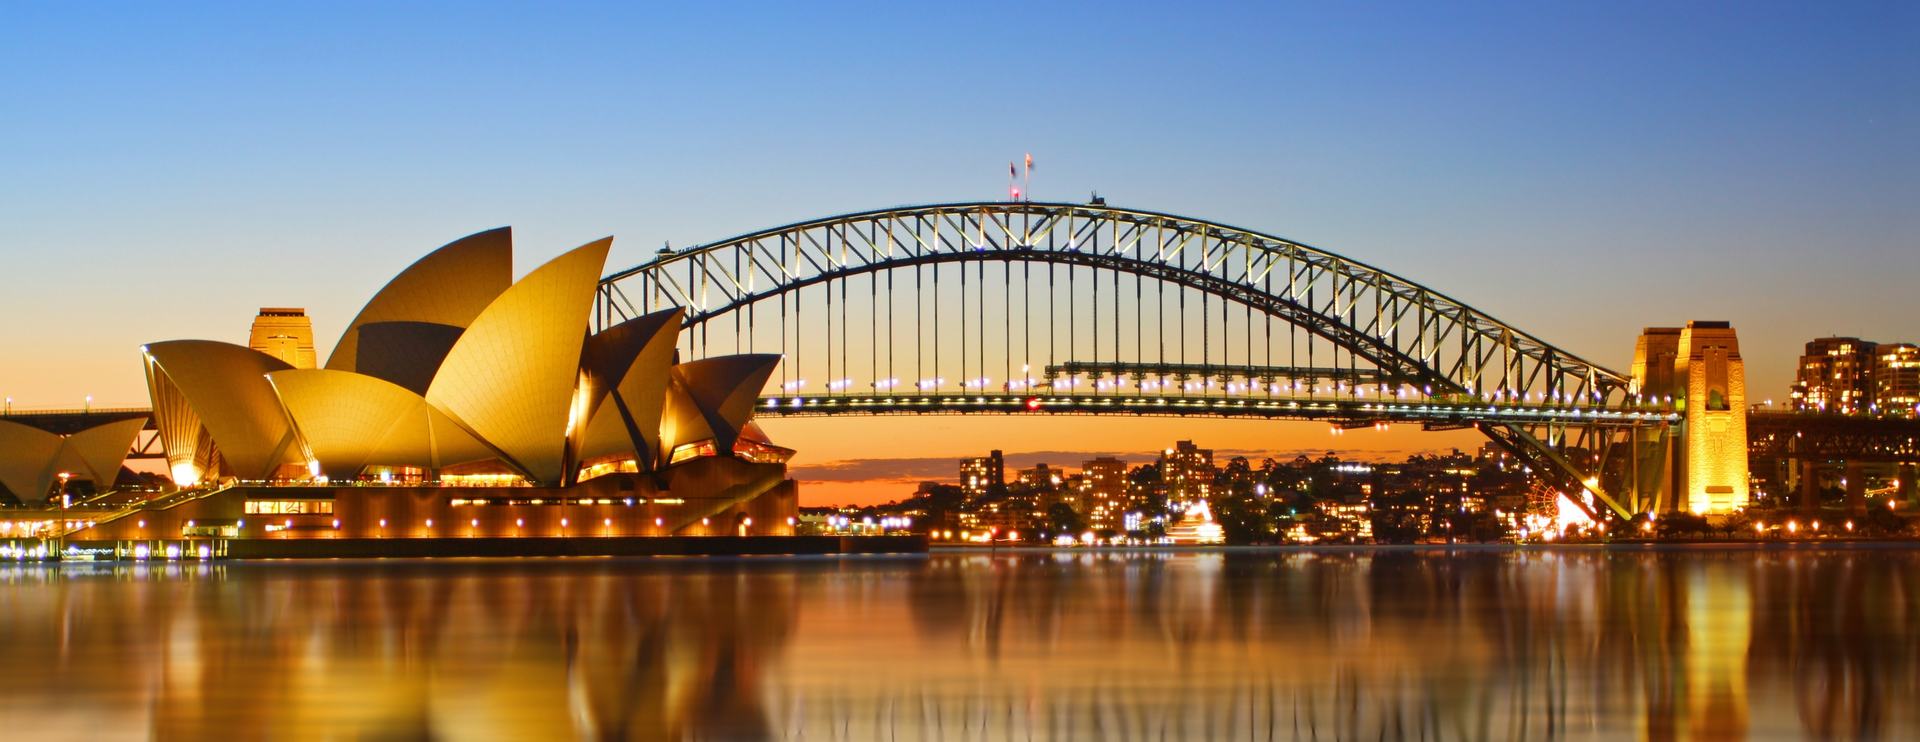 Sydney Harbour Image 1